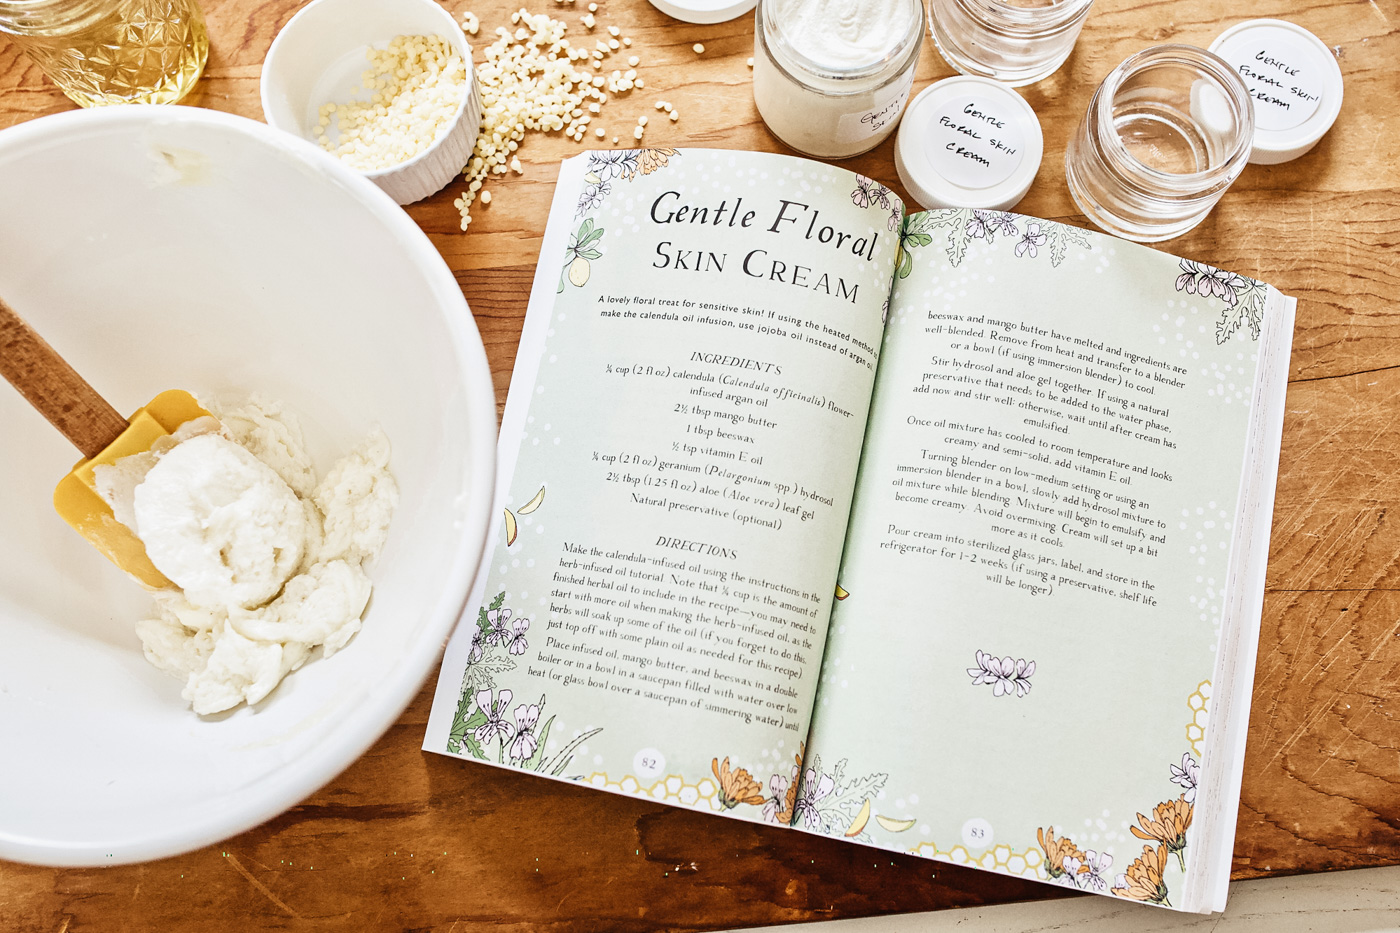 Gentle Floral Skin Cream from Botanical Skin Care Recipe Book